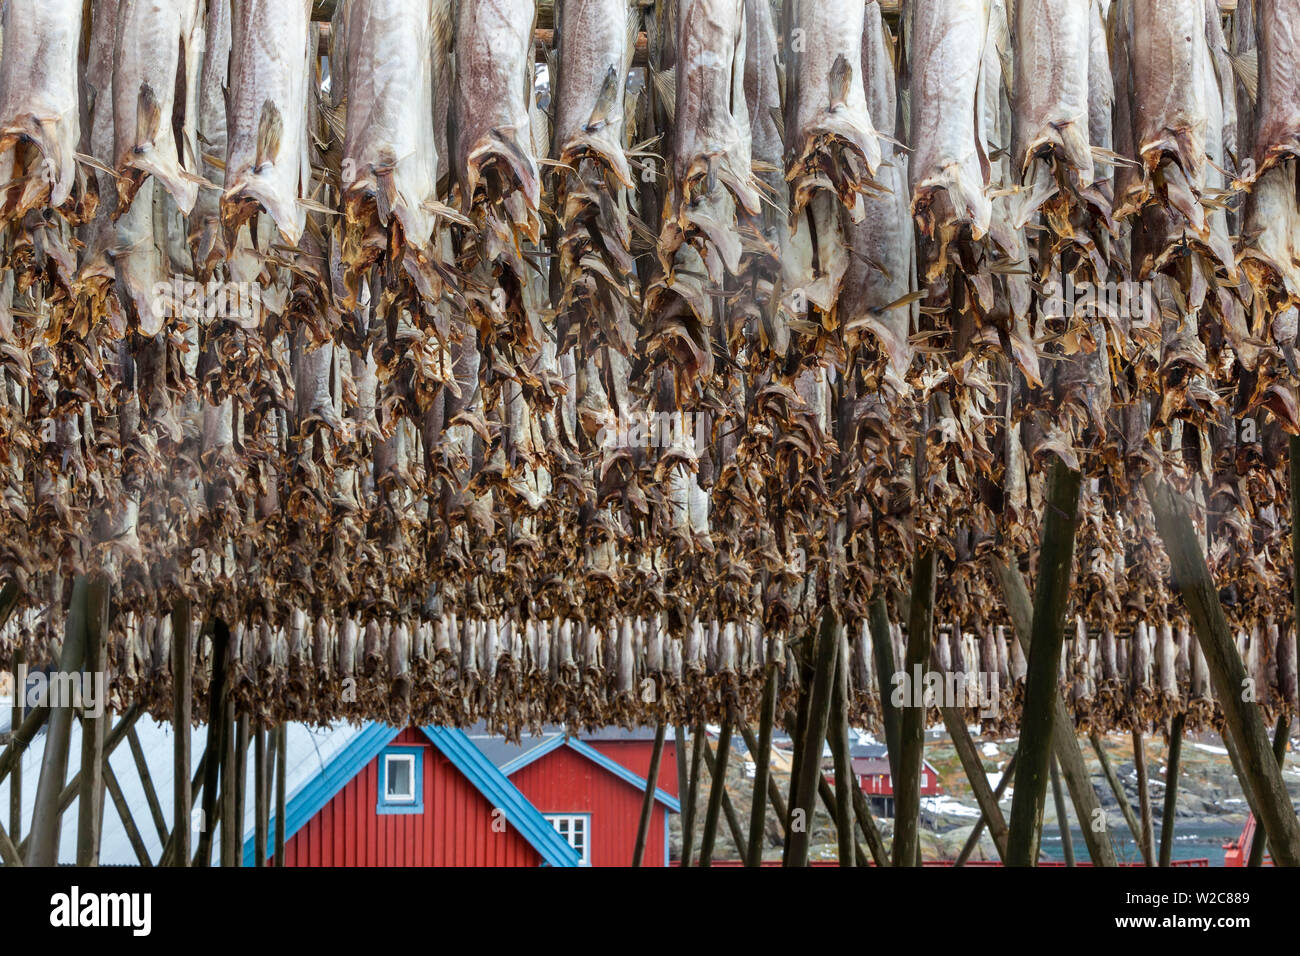 Stockfisch (Cod) trocknen auf Holz- Racks, Lofoten, Nordland, Norwegen Stockfoto